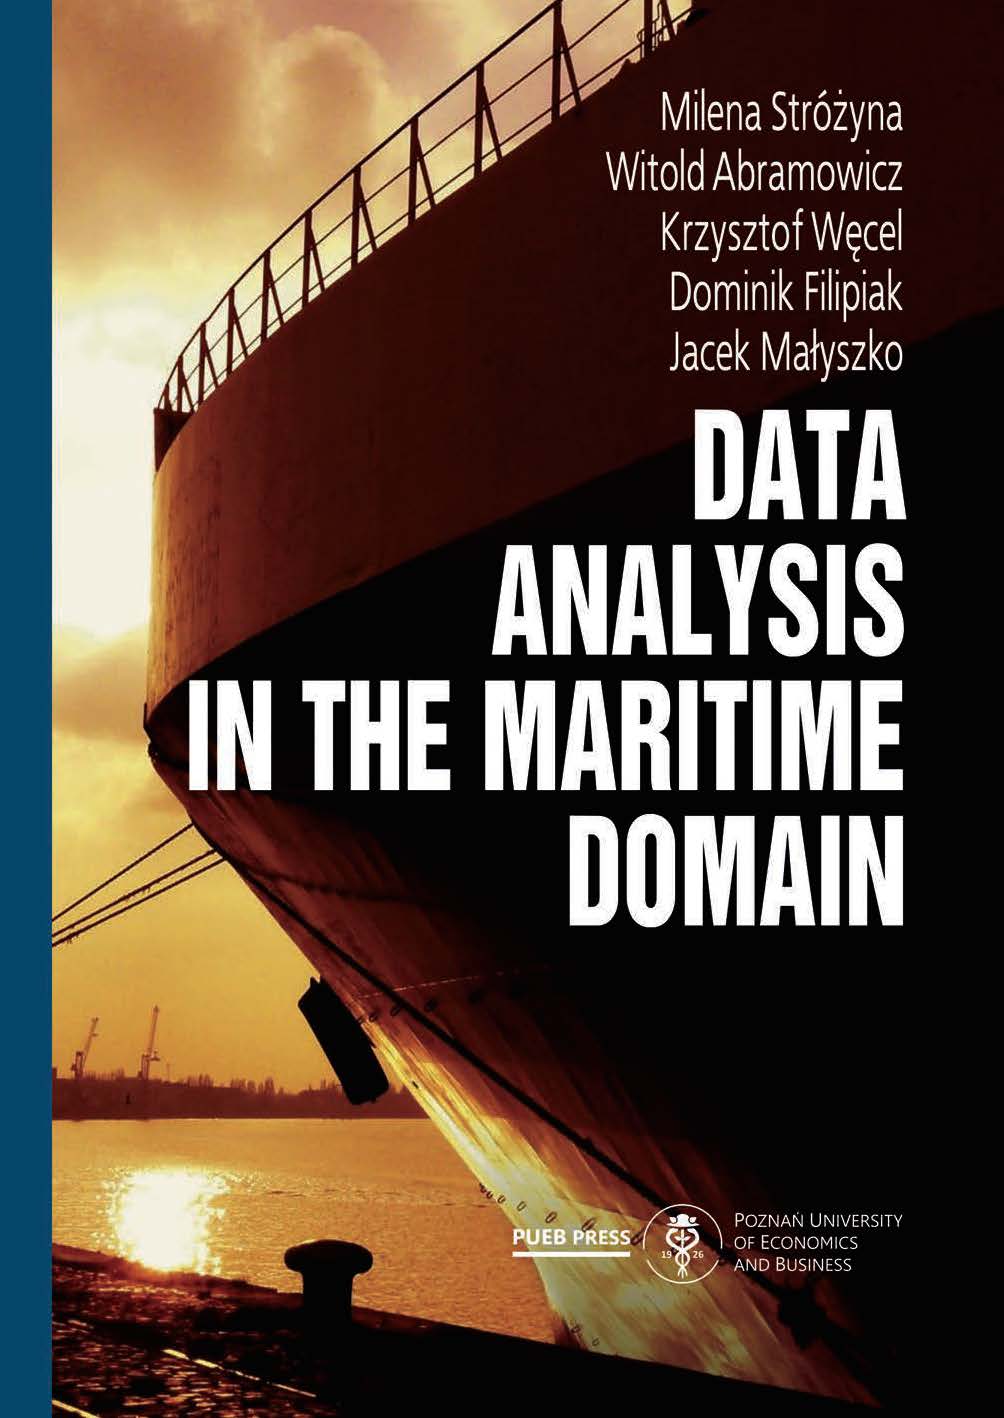 Data analysis in the maritime domain